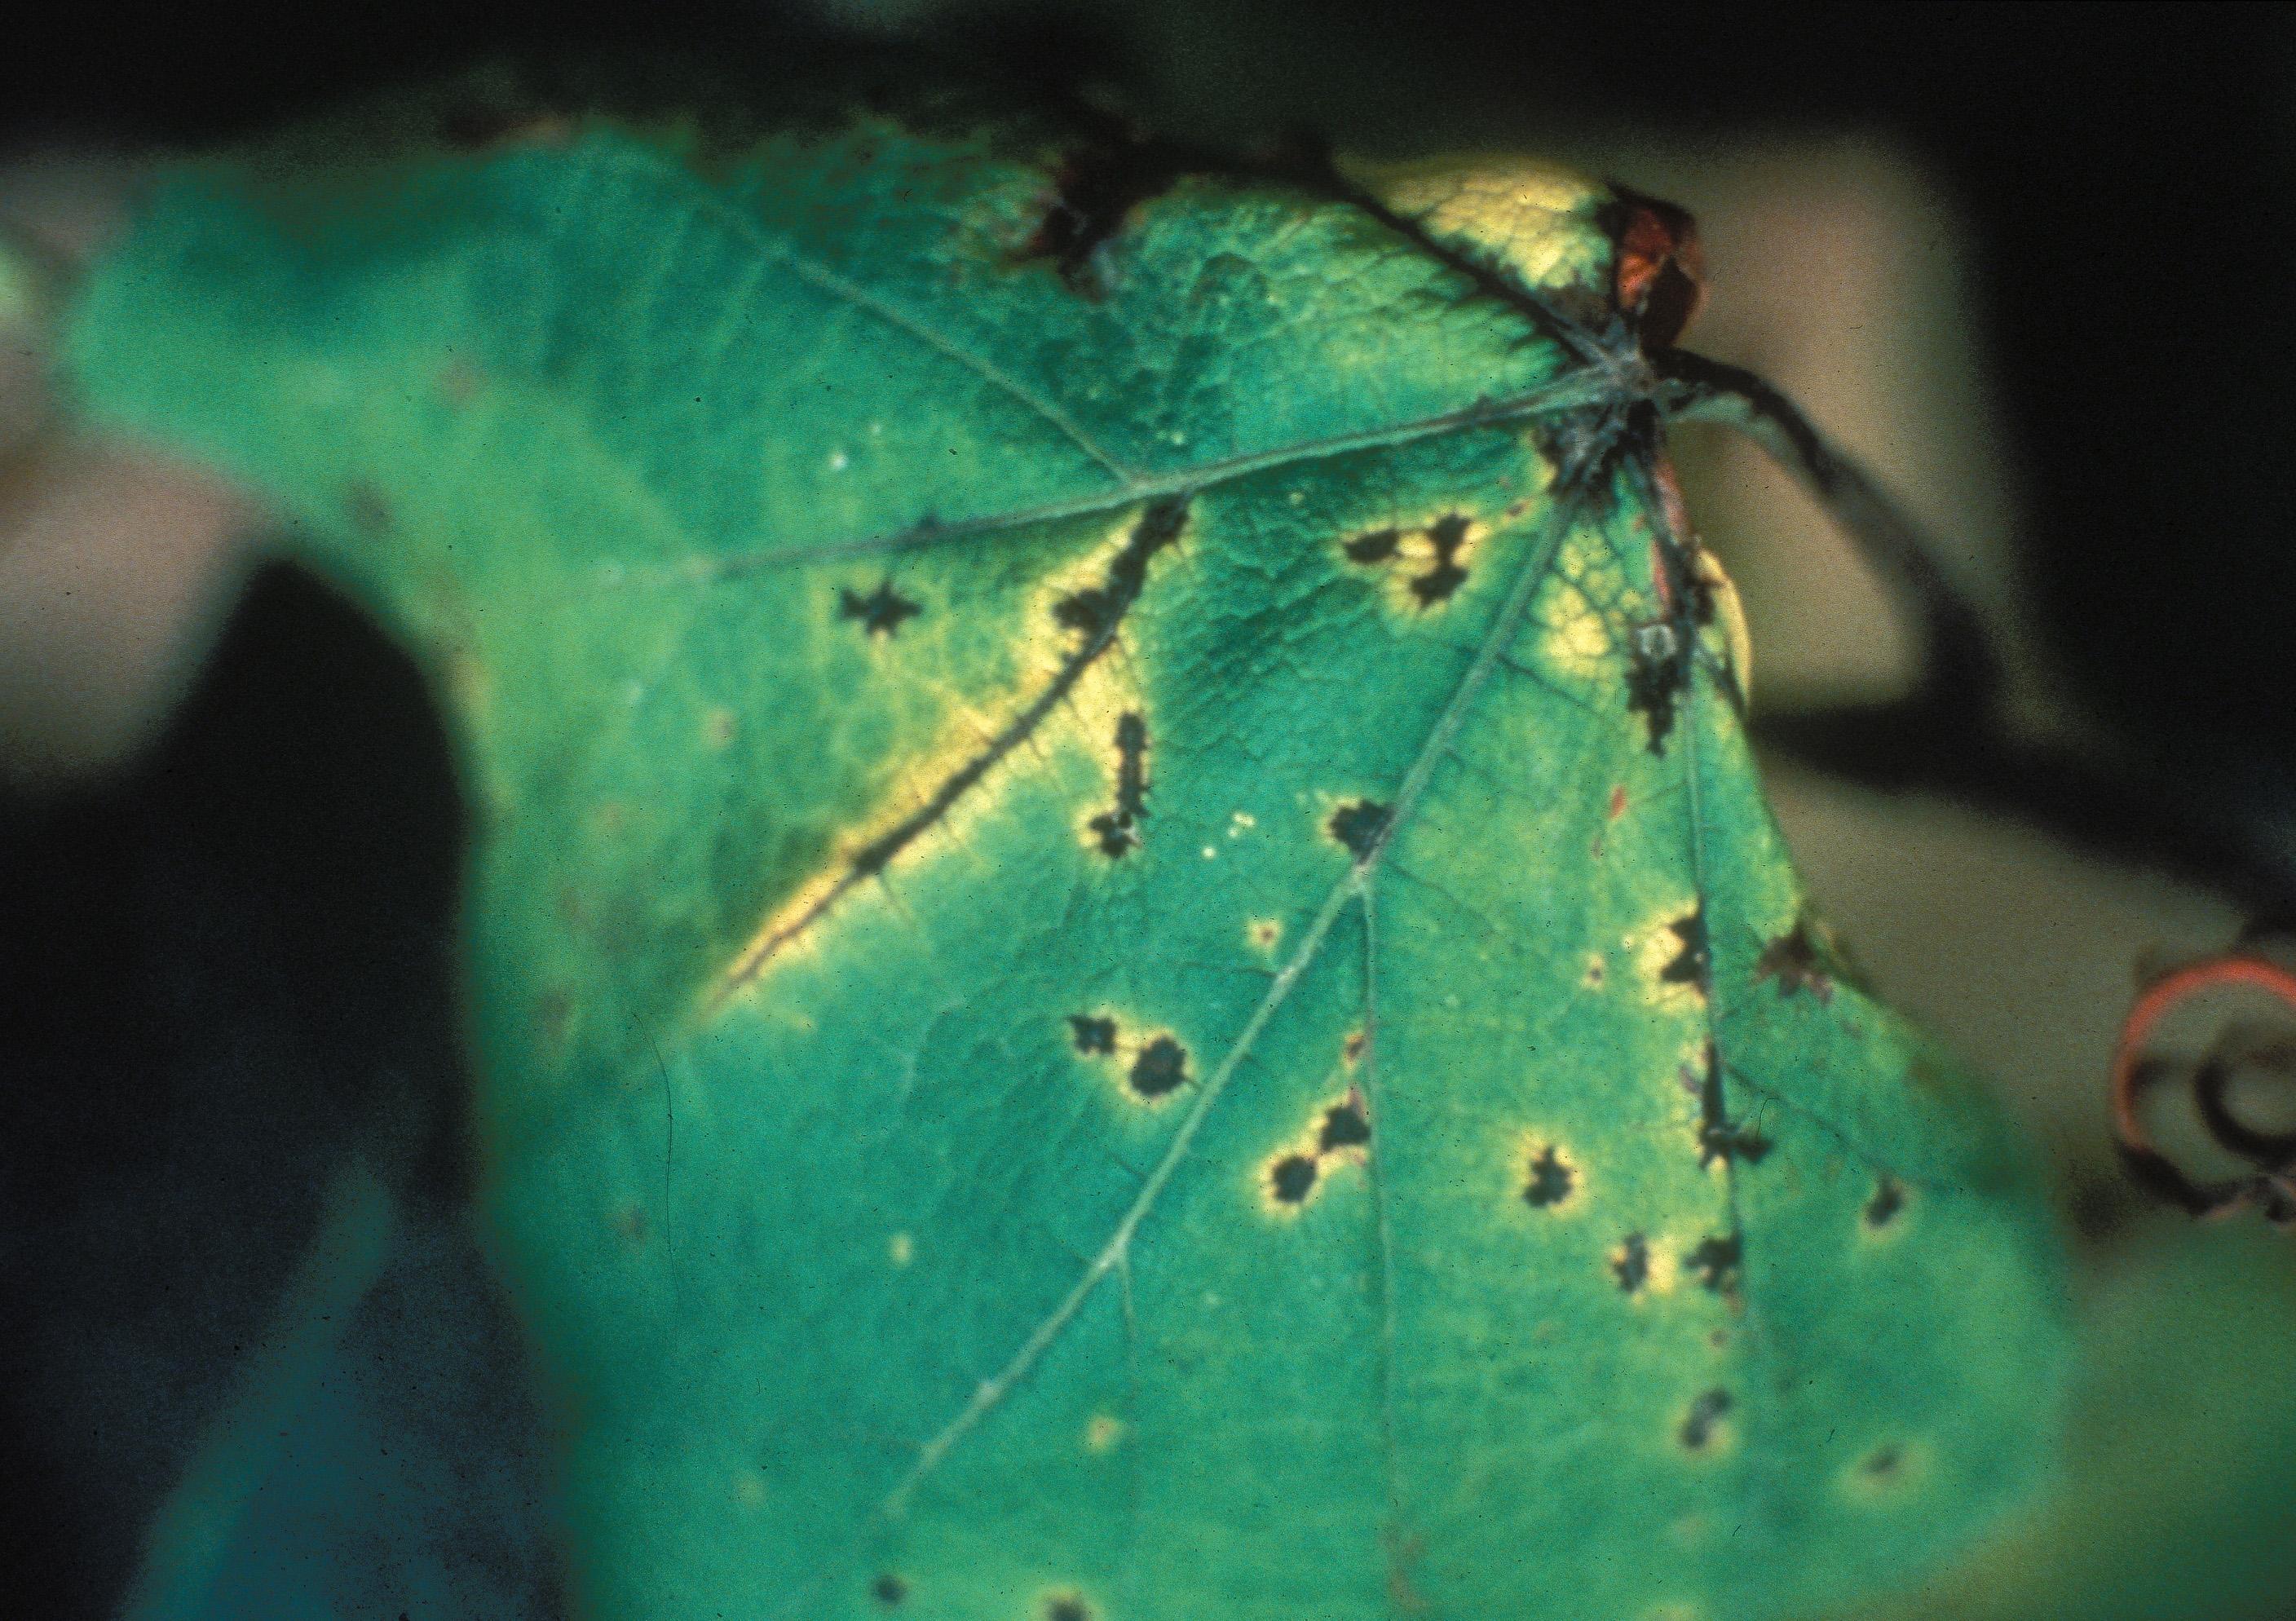 Phomopsis cane and rachis rot (Photo: University of Georgia, Bugwood.org)